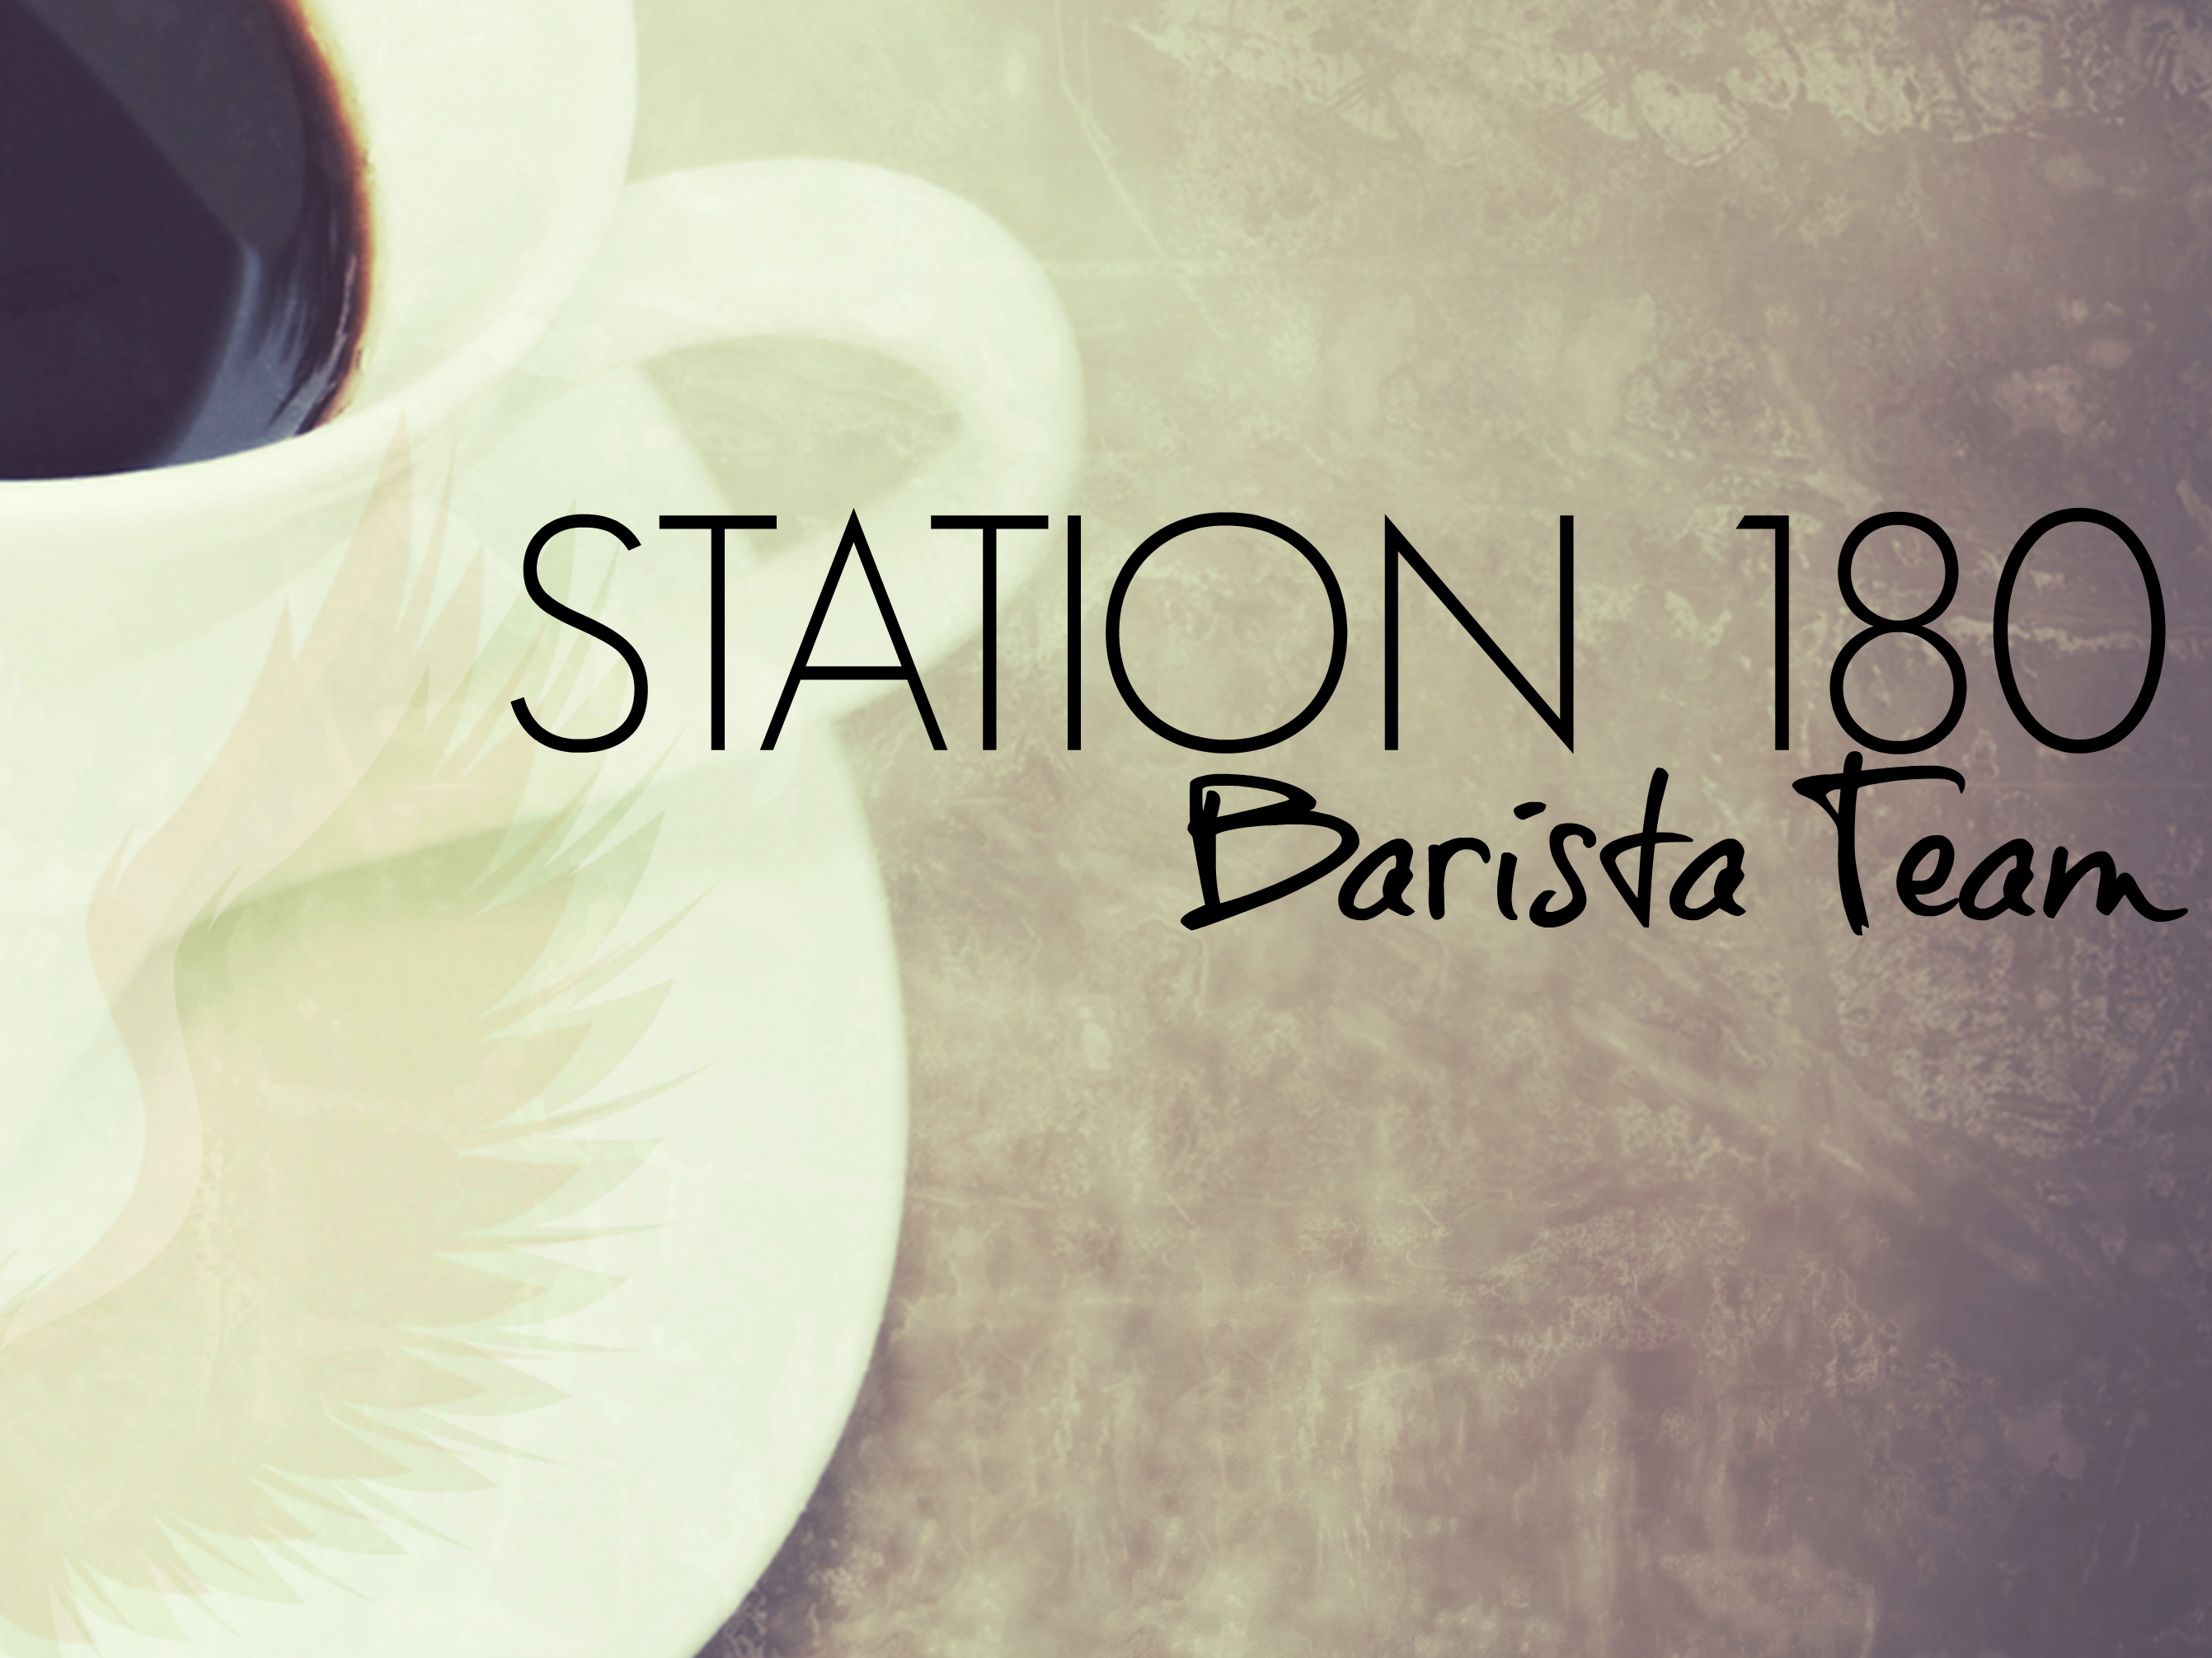 Station 180 Barista